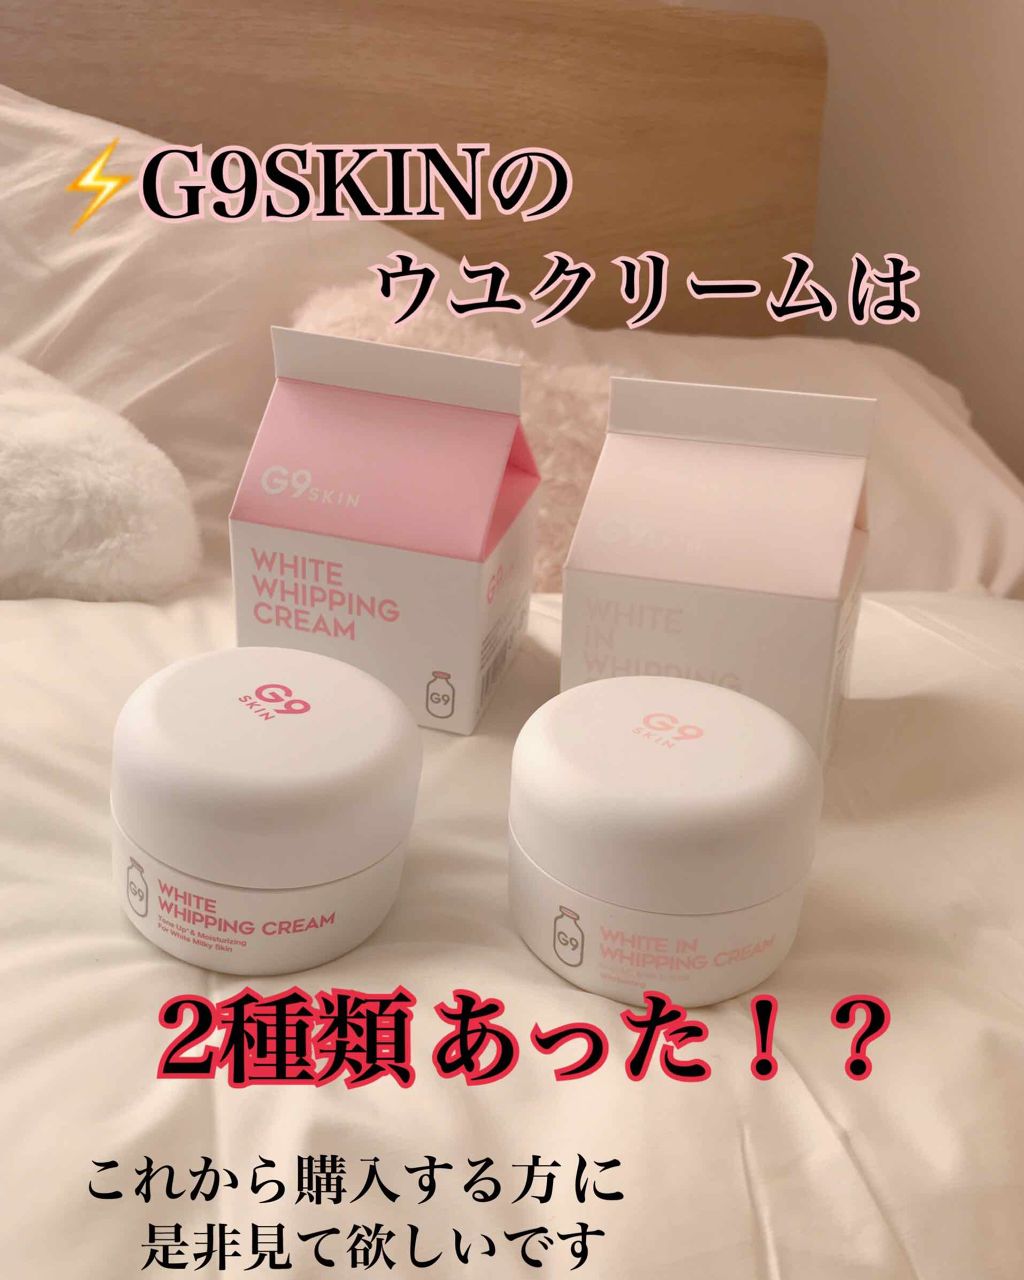 White Whipping Cream ウユクリーム ピンク G9 Skinの効果に関する口コミ G9skin ピンクの ウユクリームは2種類ある 比較画像付き By えるふぃ 混合肌 Lips